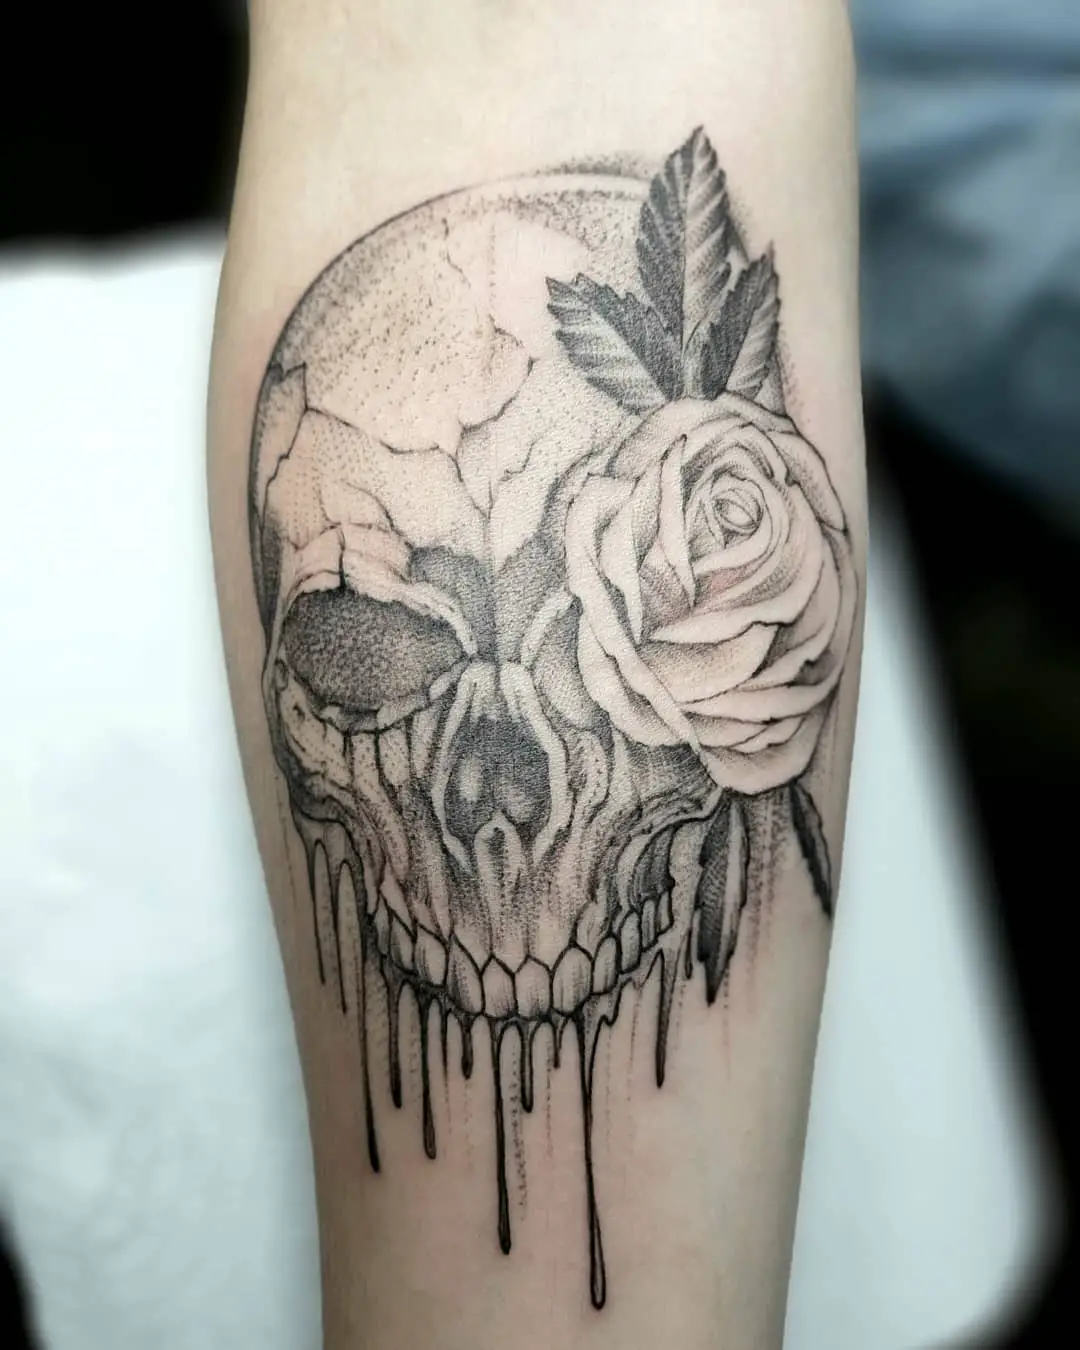 Skull and roses tattoo 